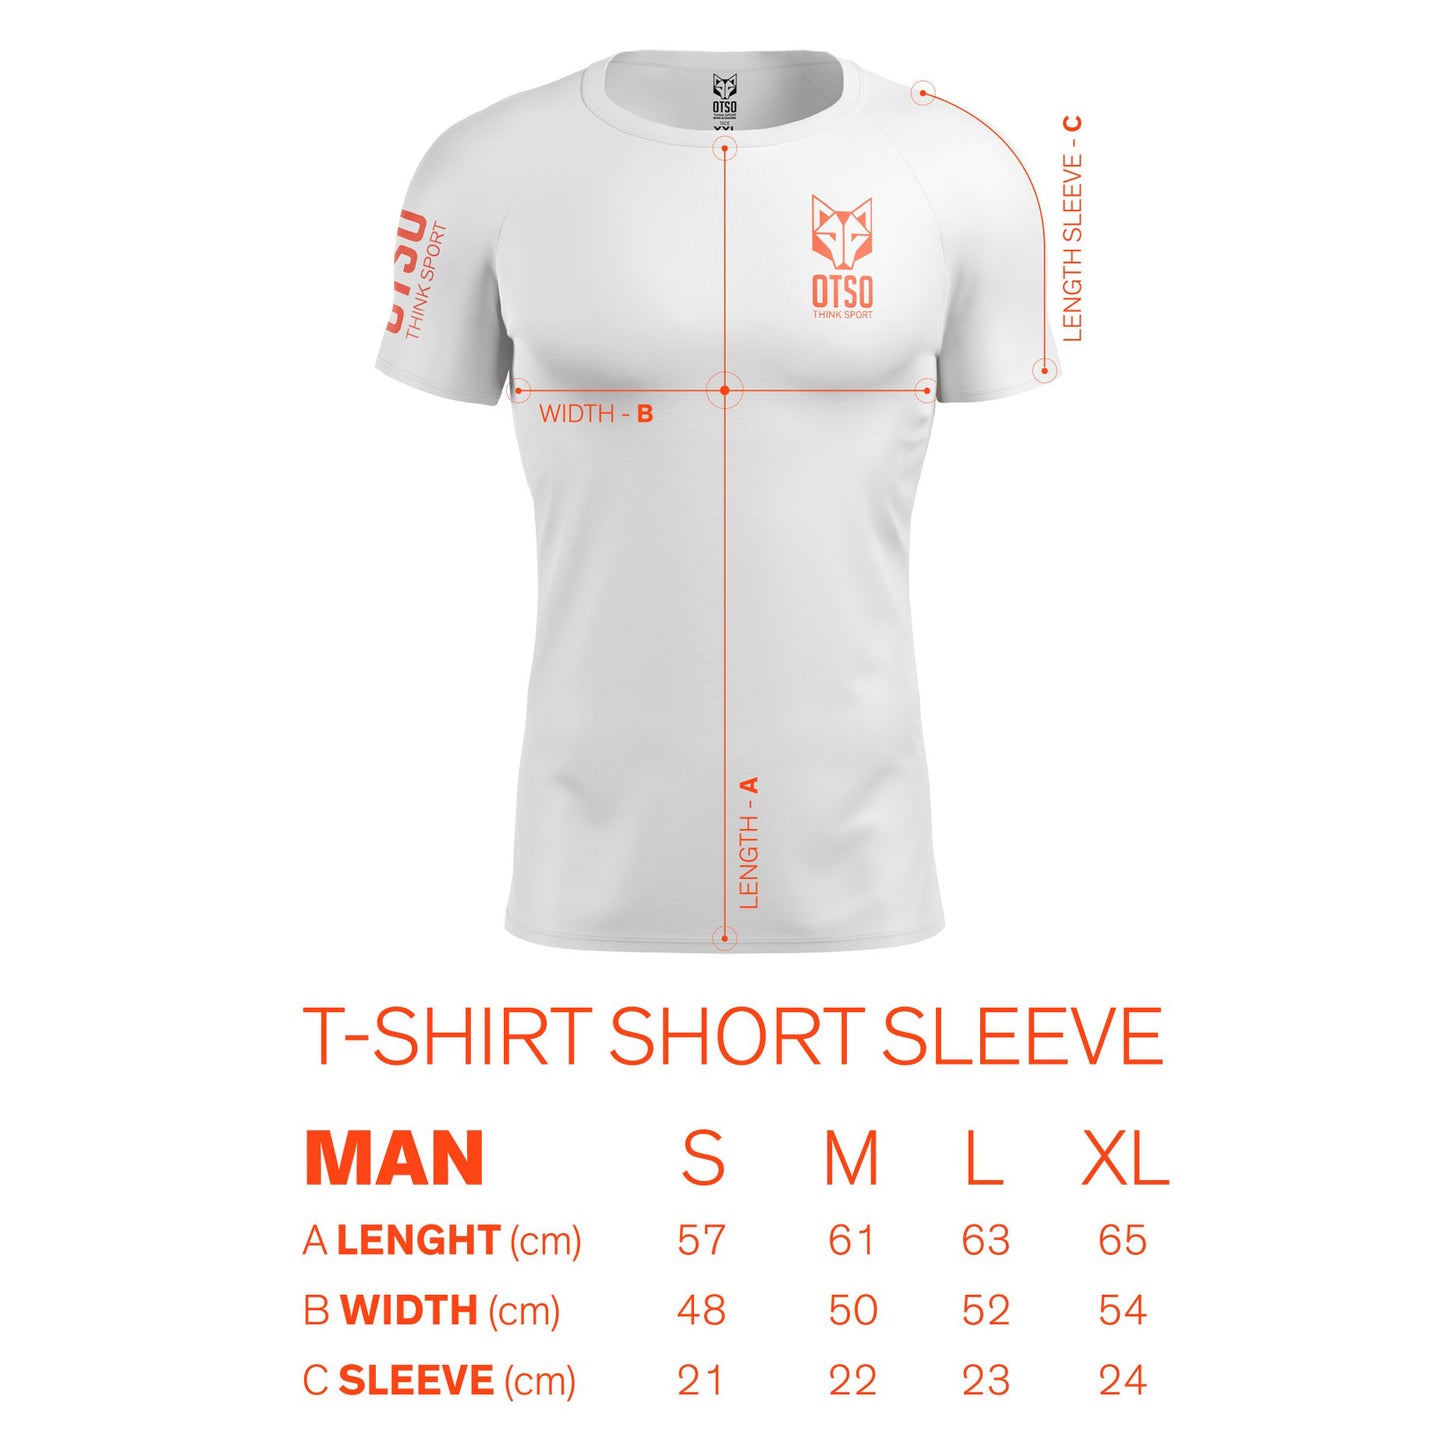 Men's short sleeve shirt - Swim Bike Run Flower